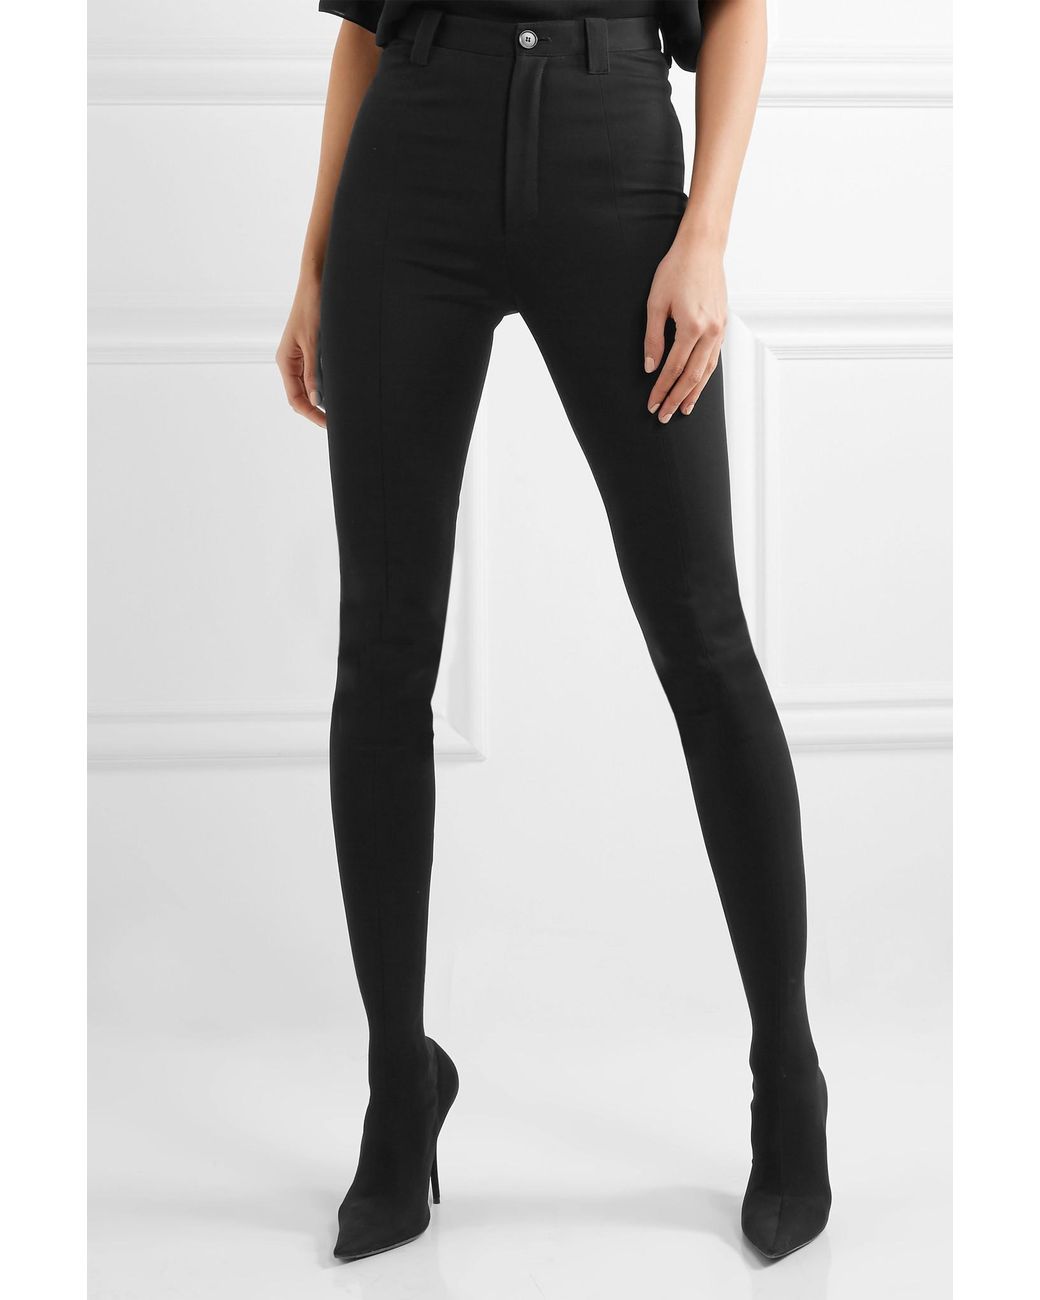 Balenciaga Cosmetic Pantashoe Spandex Skinny Pants in Black | Lyst